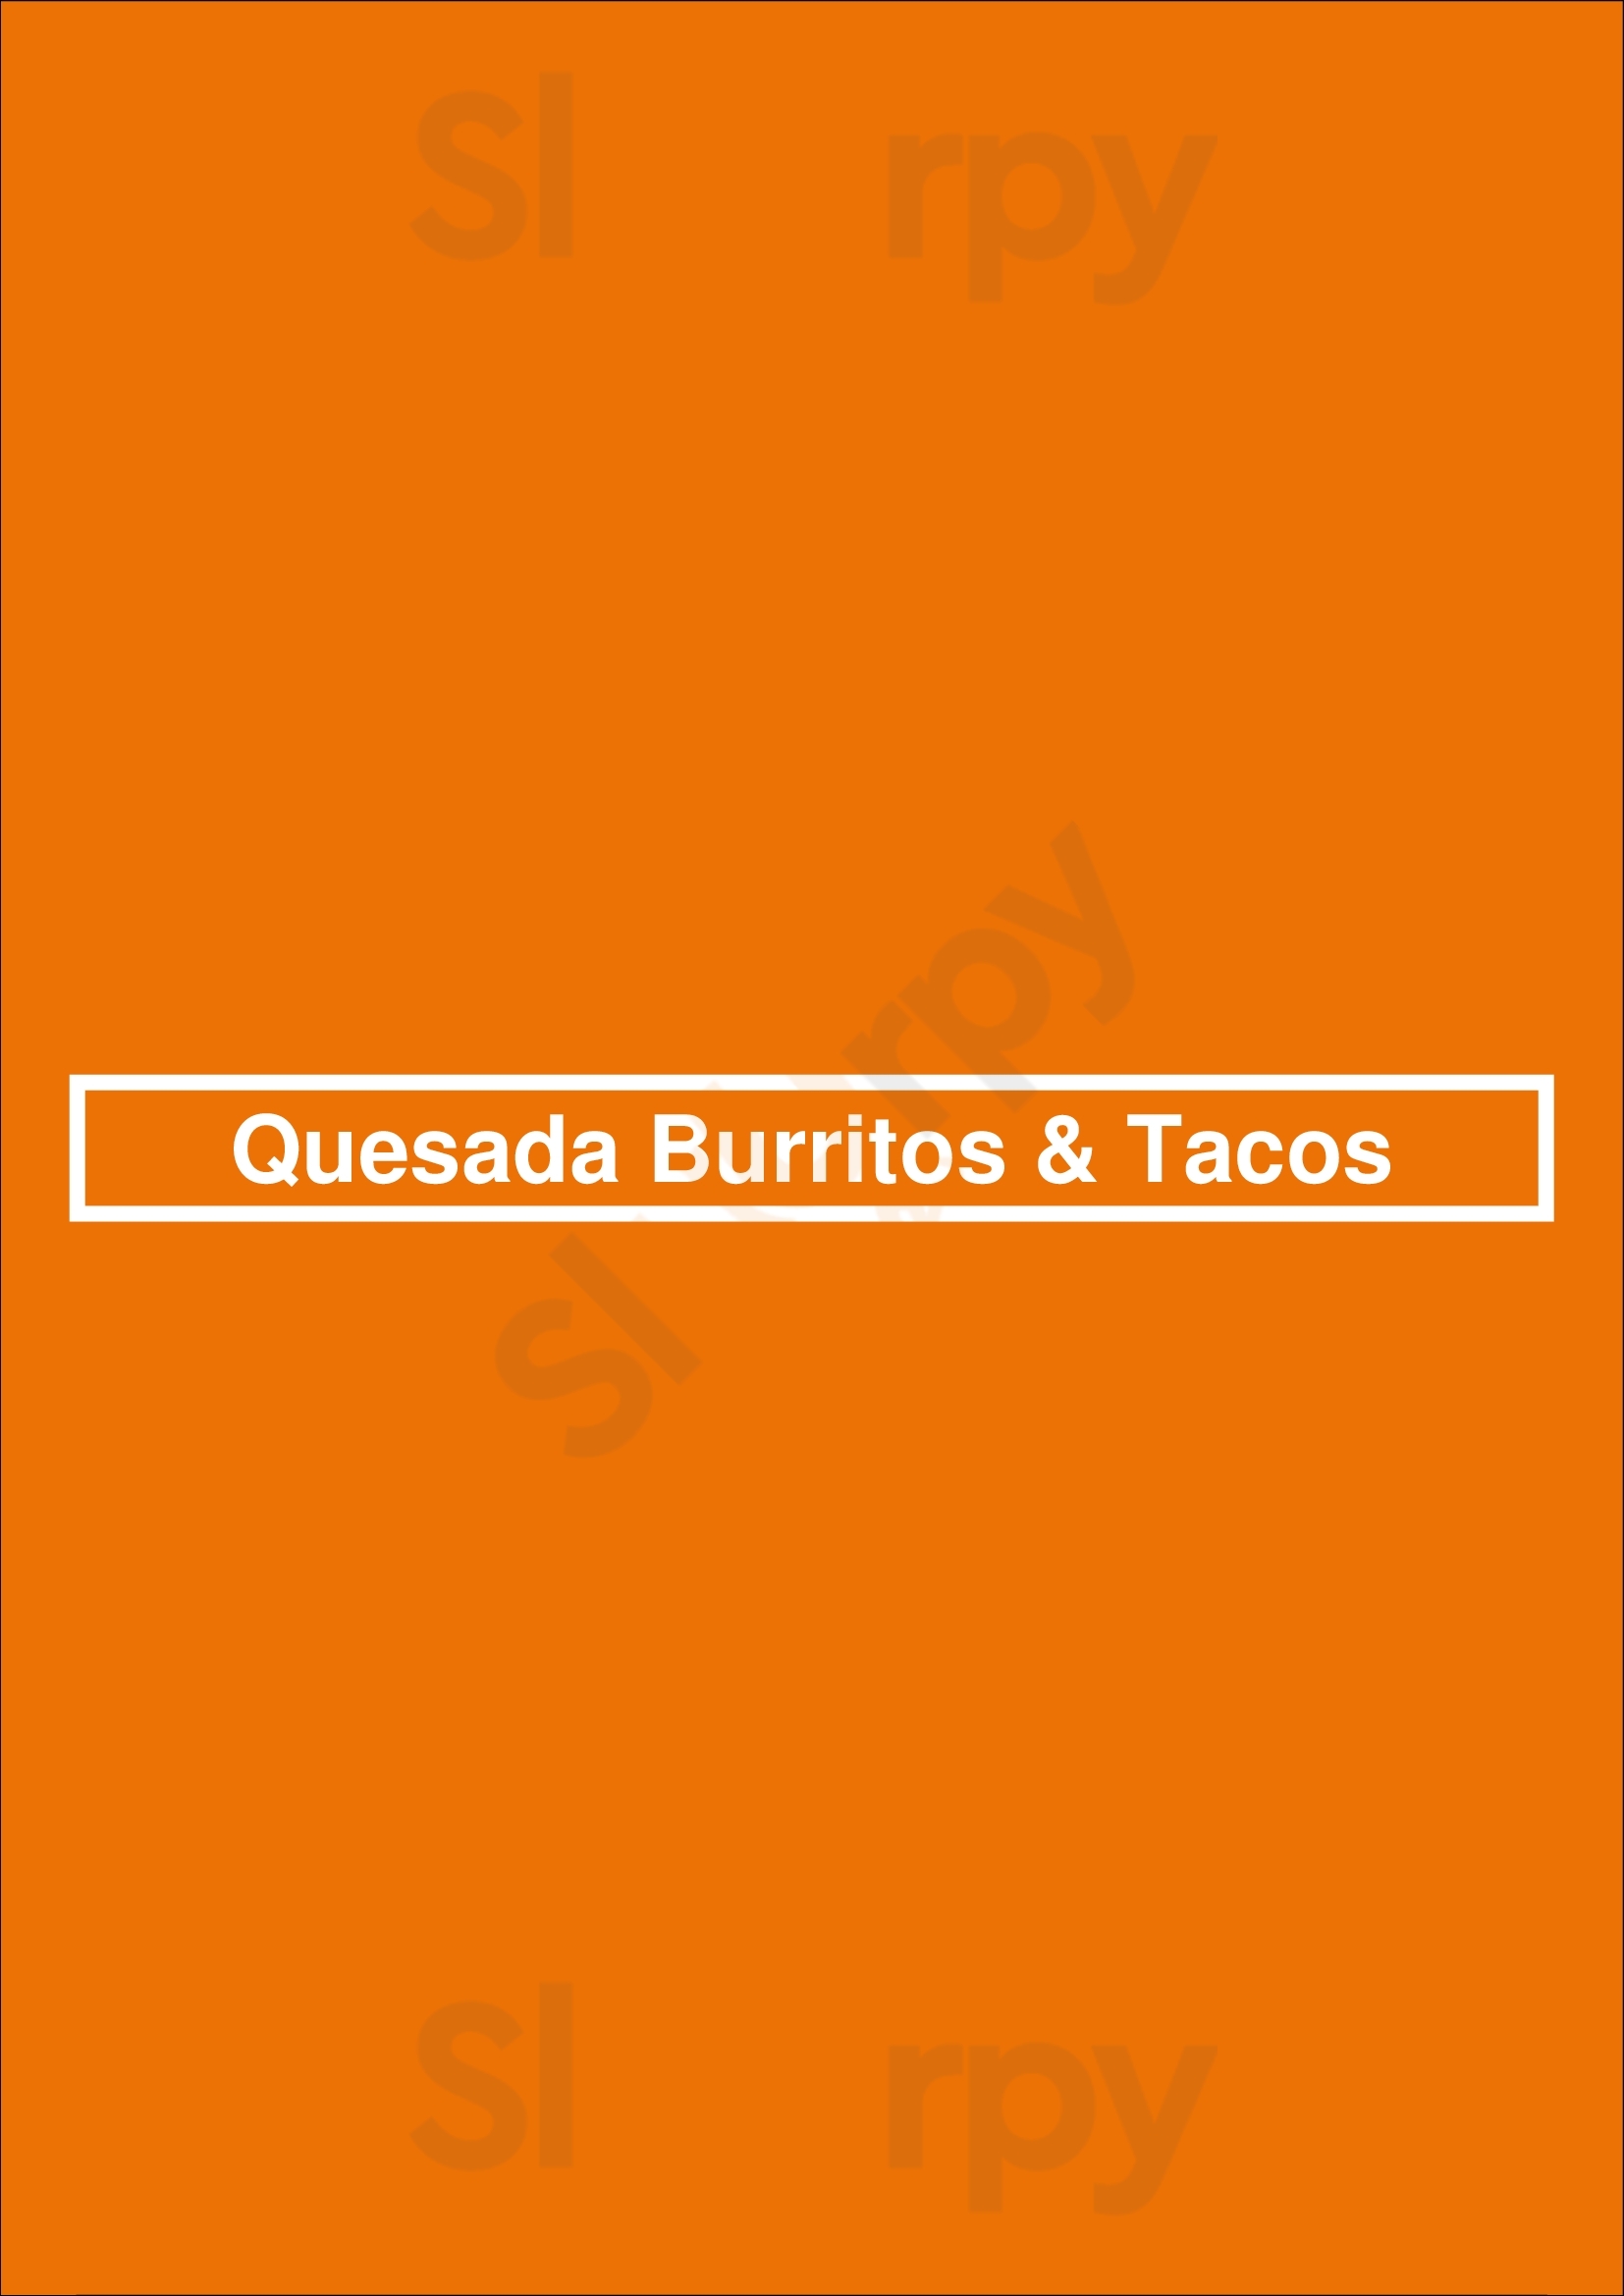 Quesada Burritos & Tacos Kingston Menu - 1